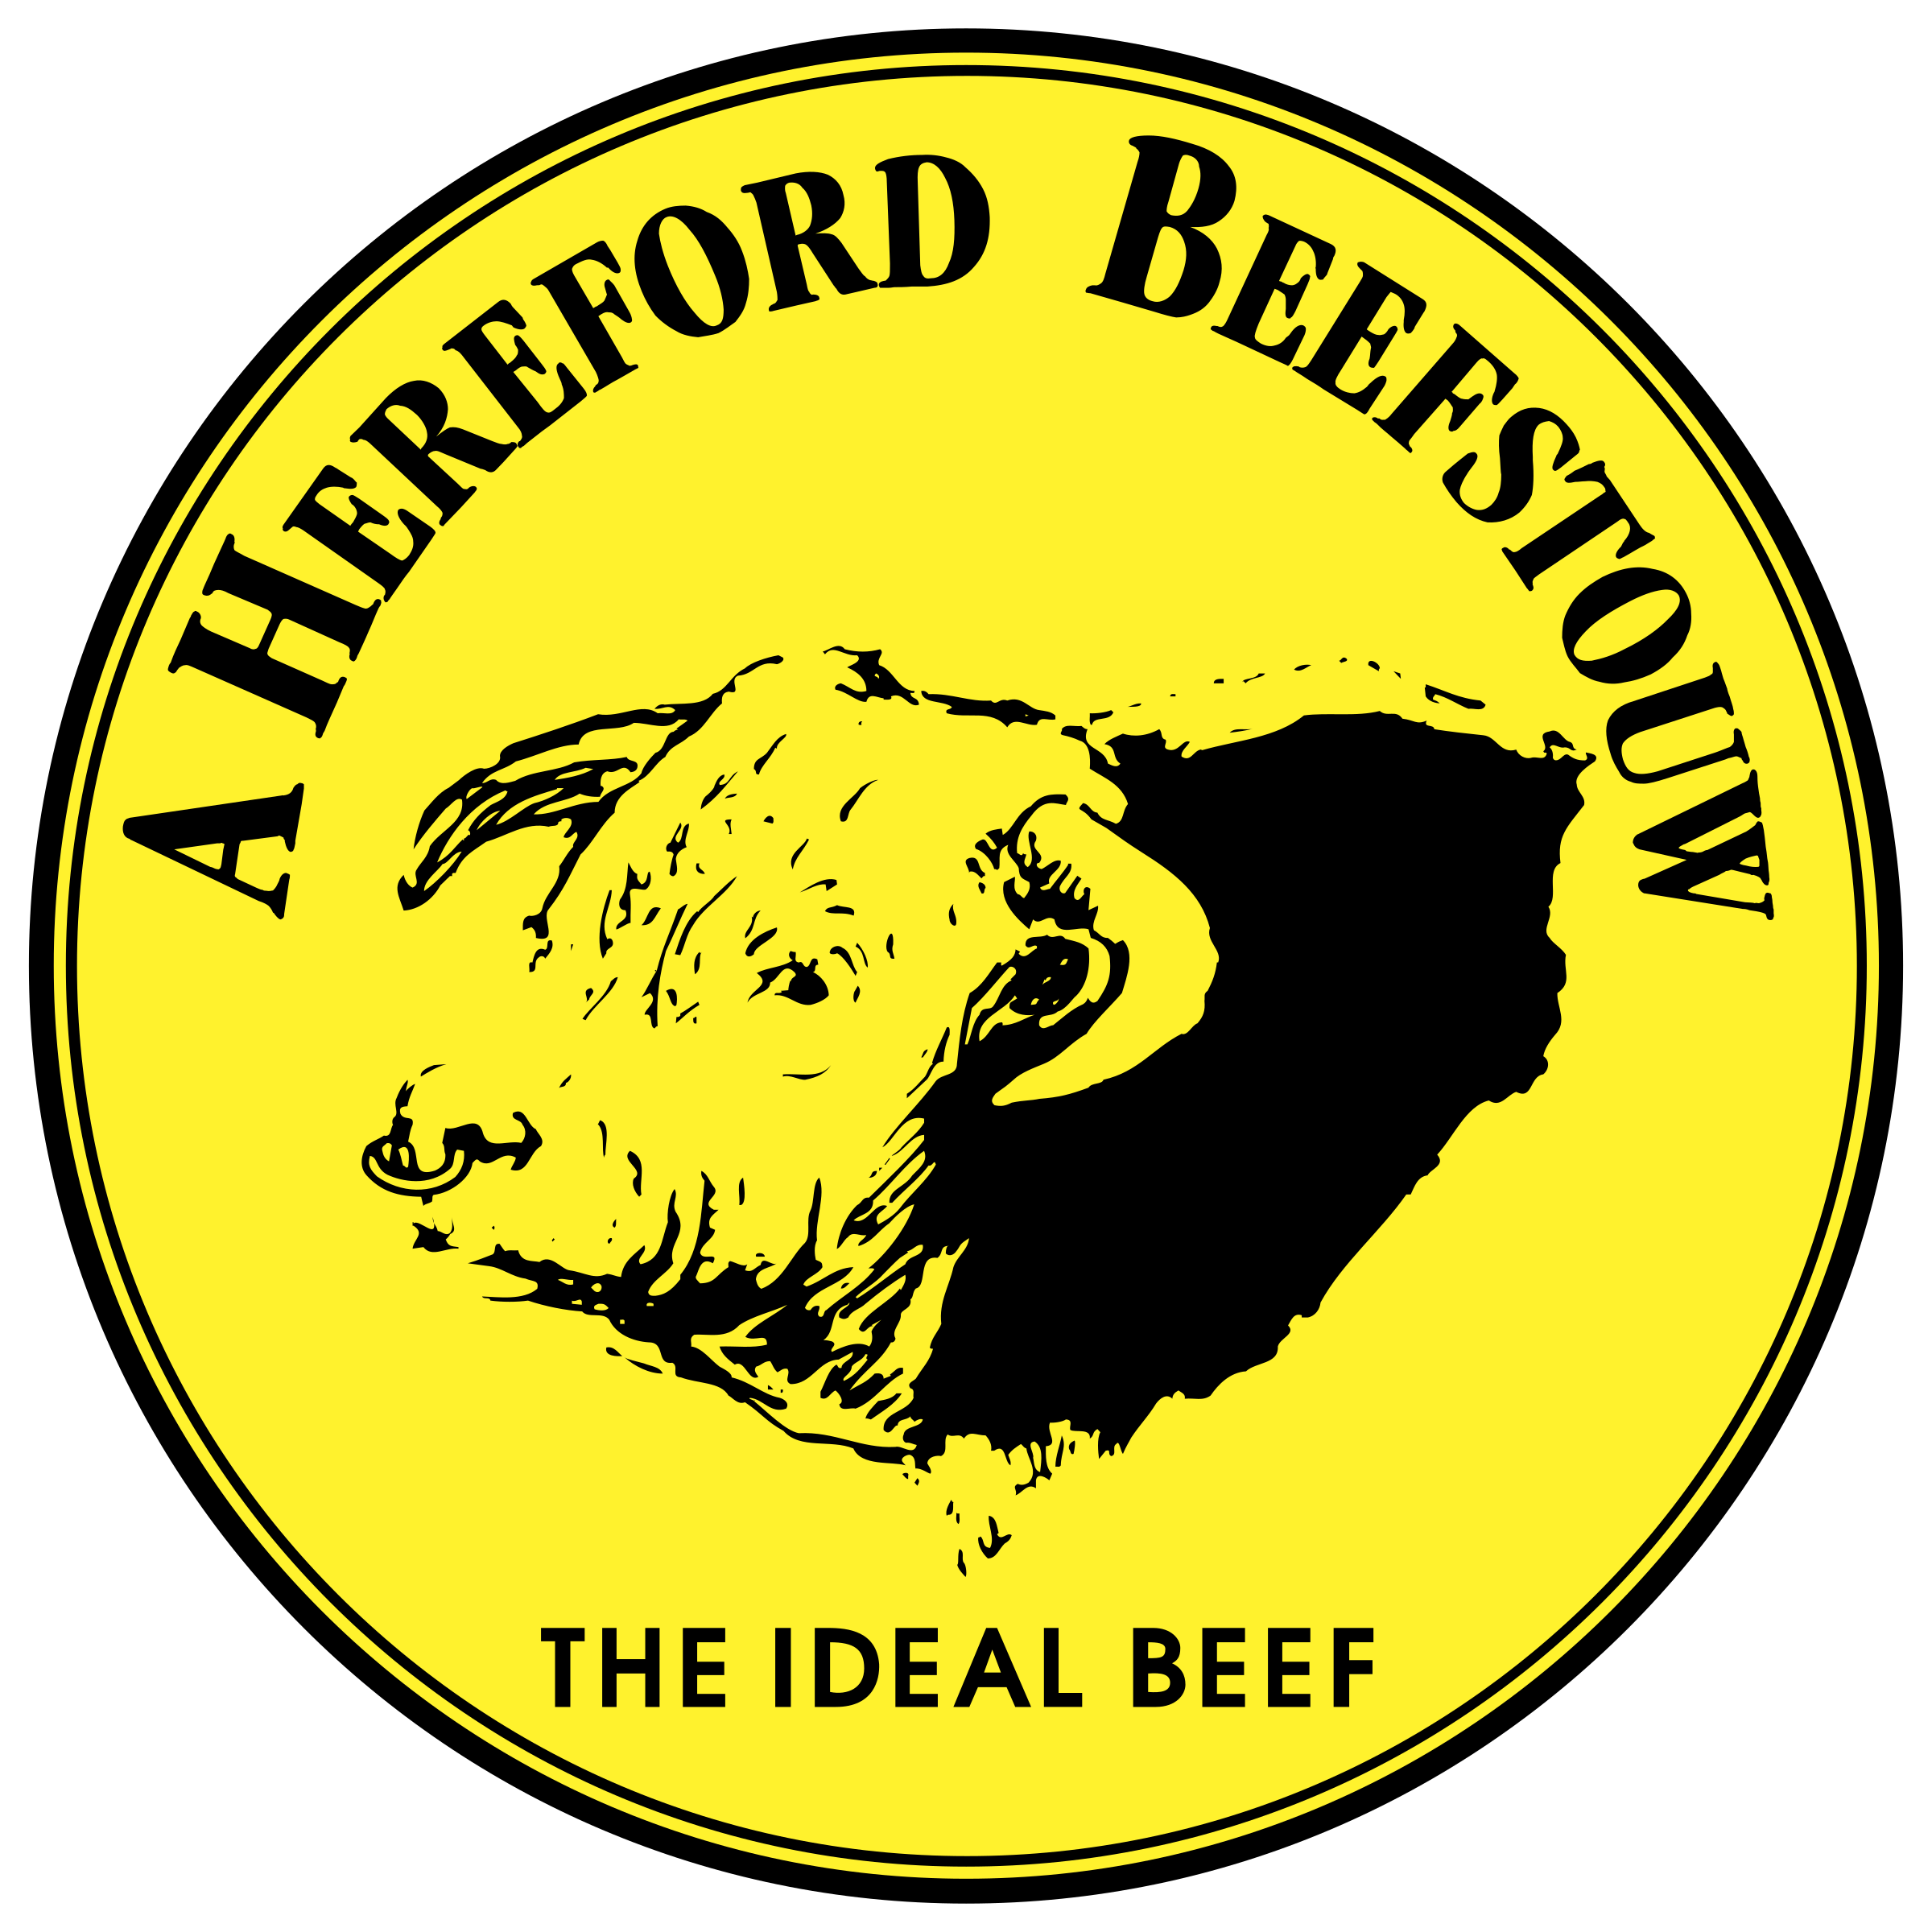 Hereford Logo - Hereford Beefstouw Logo PNG Transparent & SVG Vector